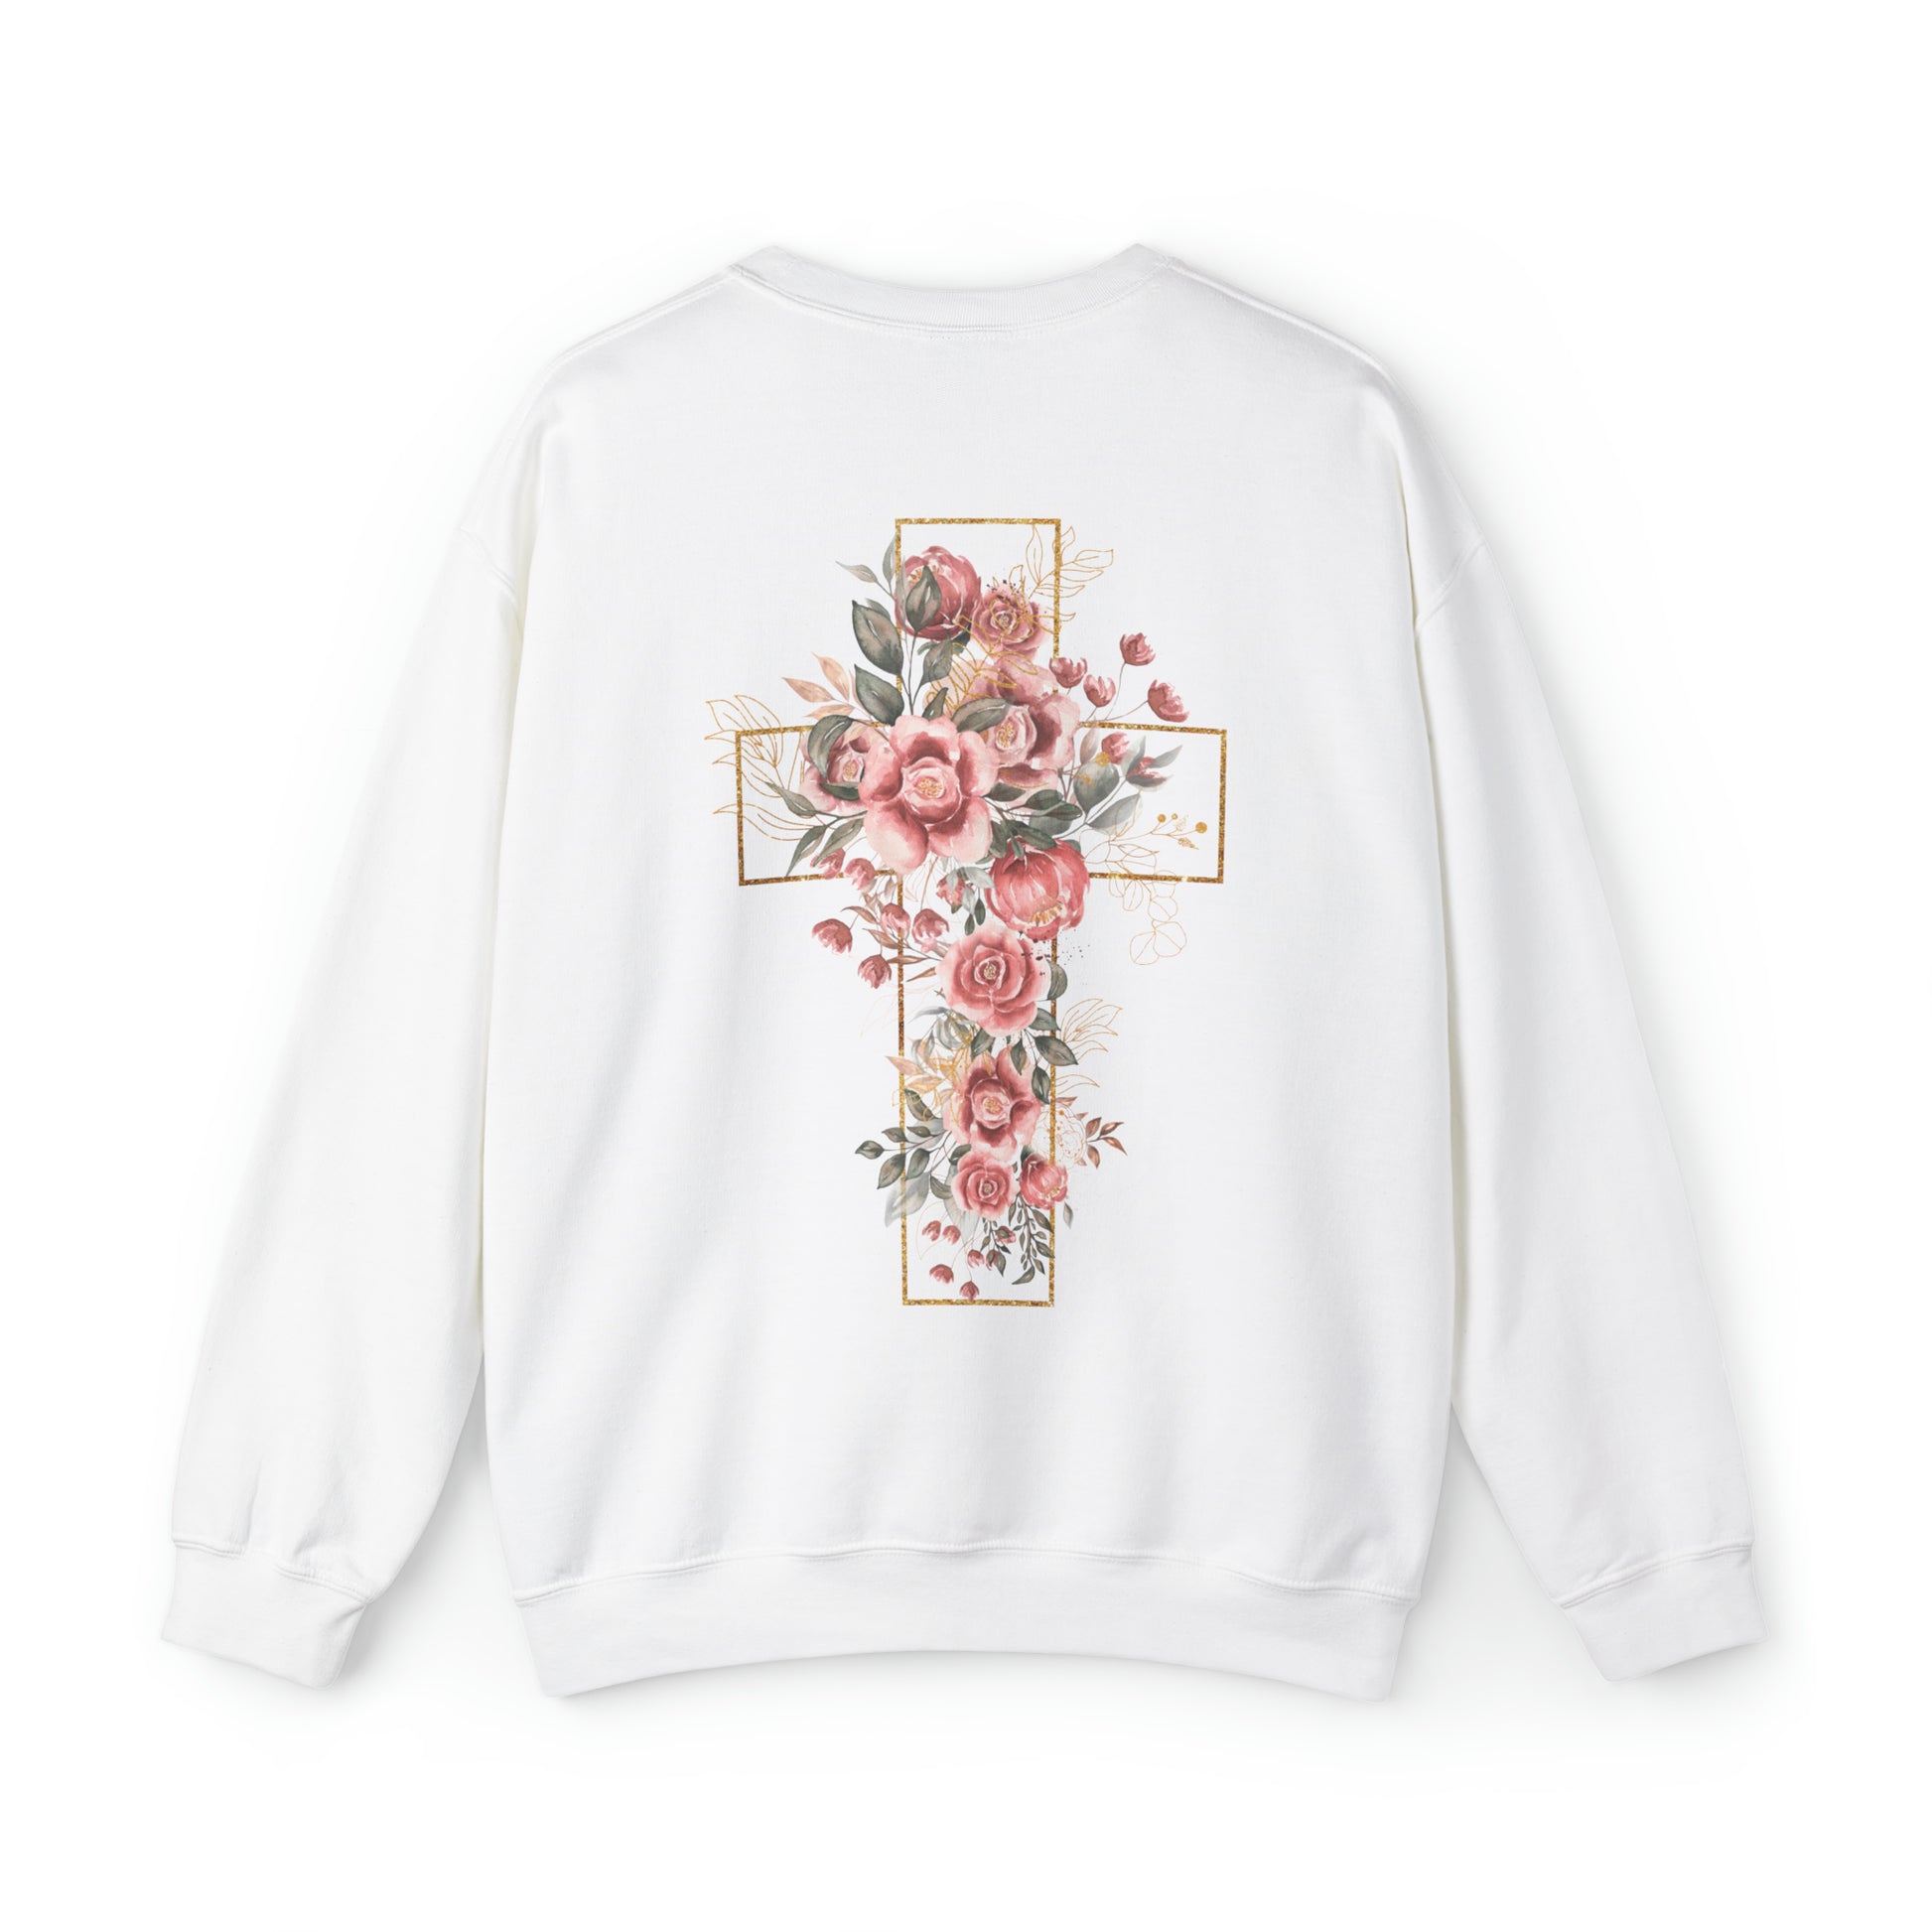 Unisex Blooming Flower Cross Heavy Blend Crewneck Sweatshirt